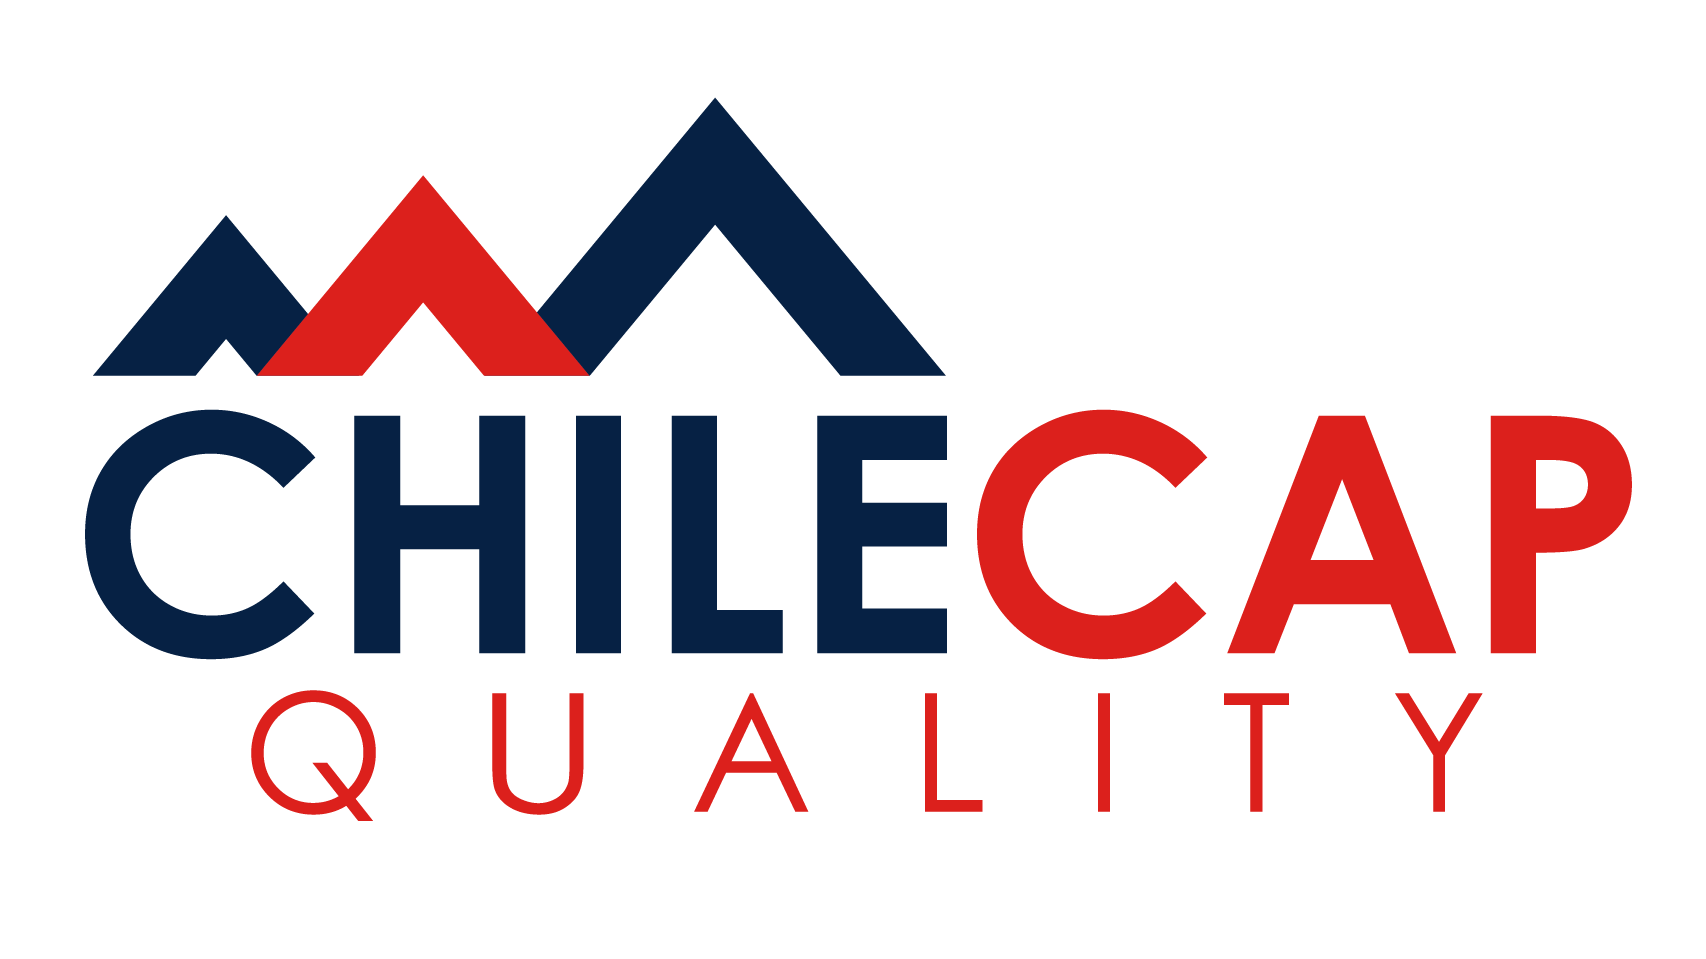 Logo Chilecap Ltda.